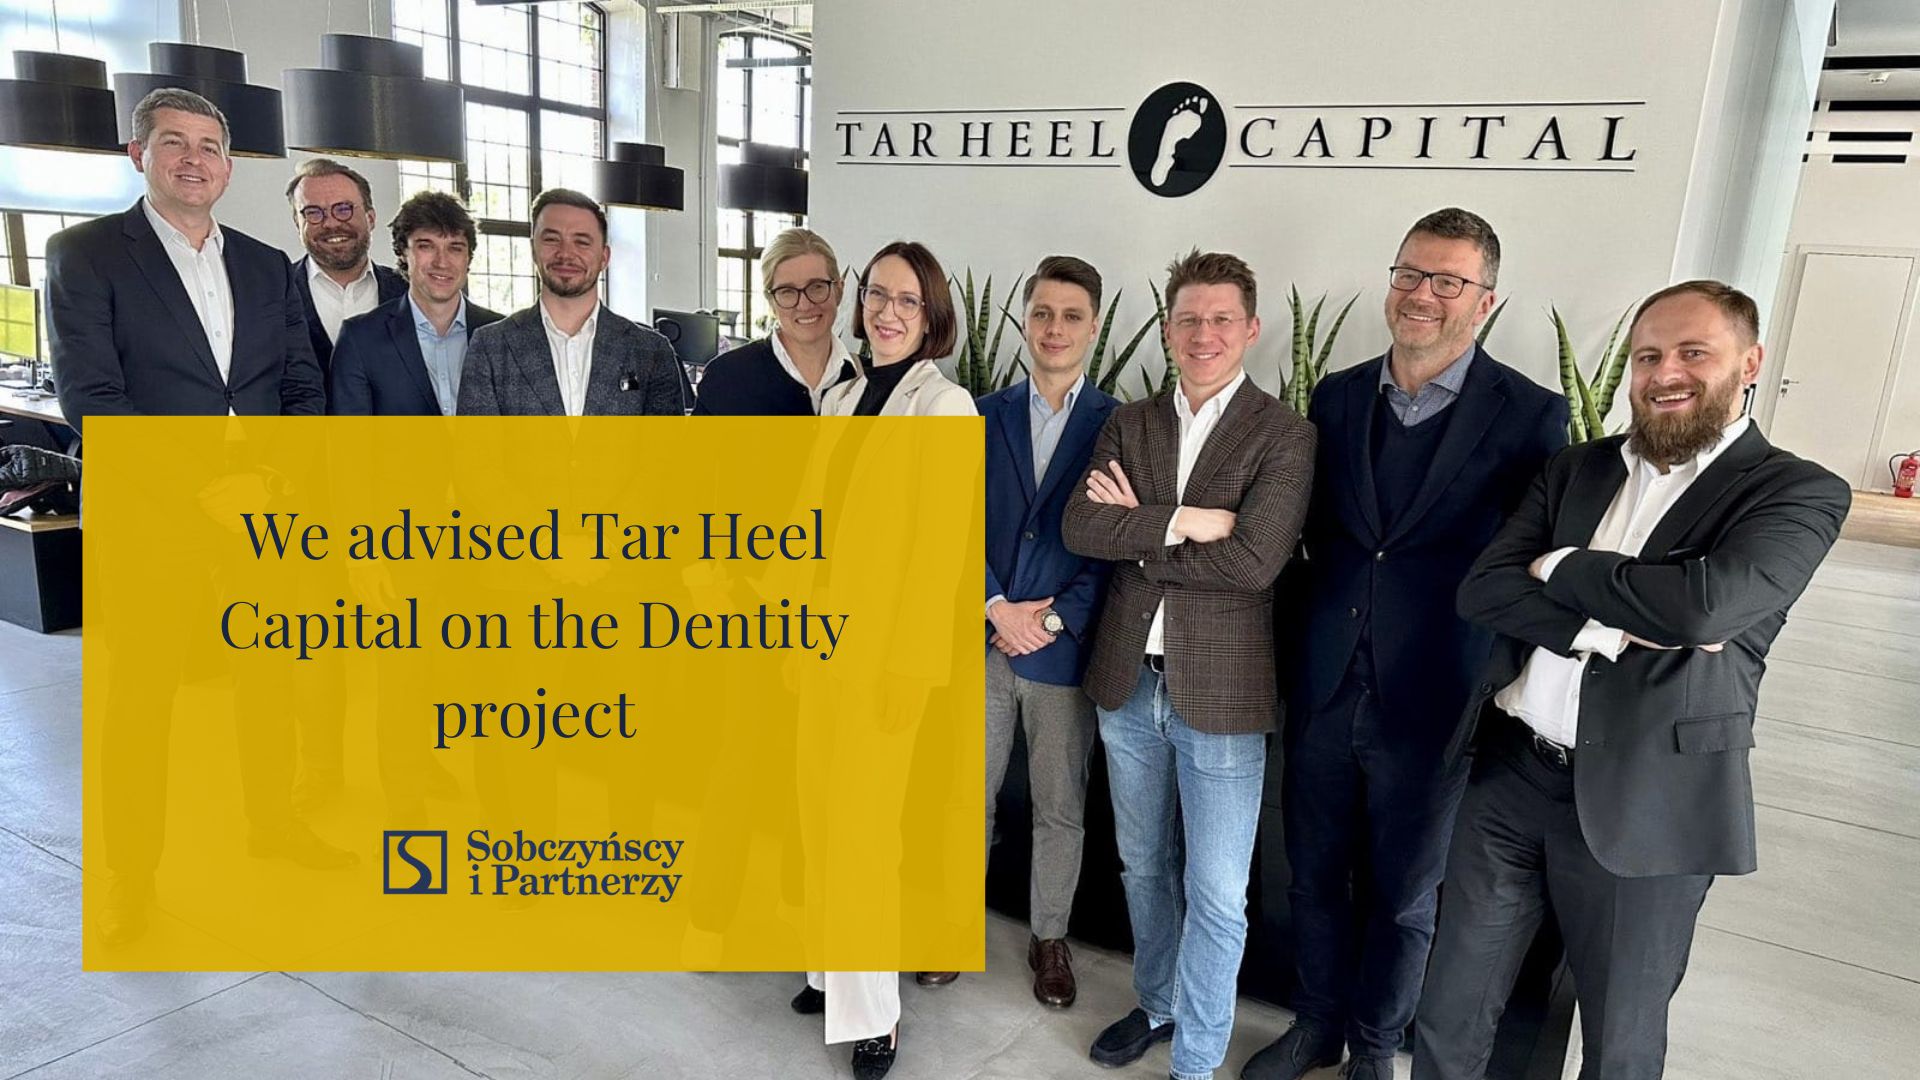 We advised Tar Heel Capital on the Dentity project